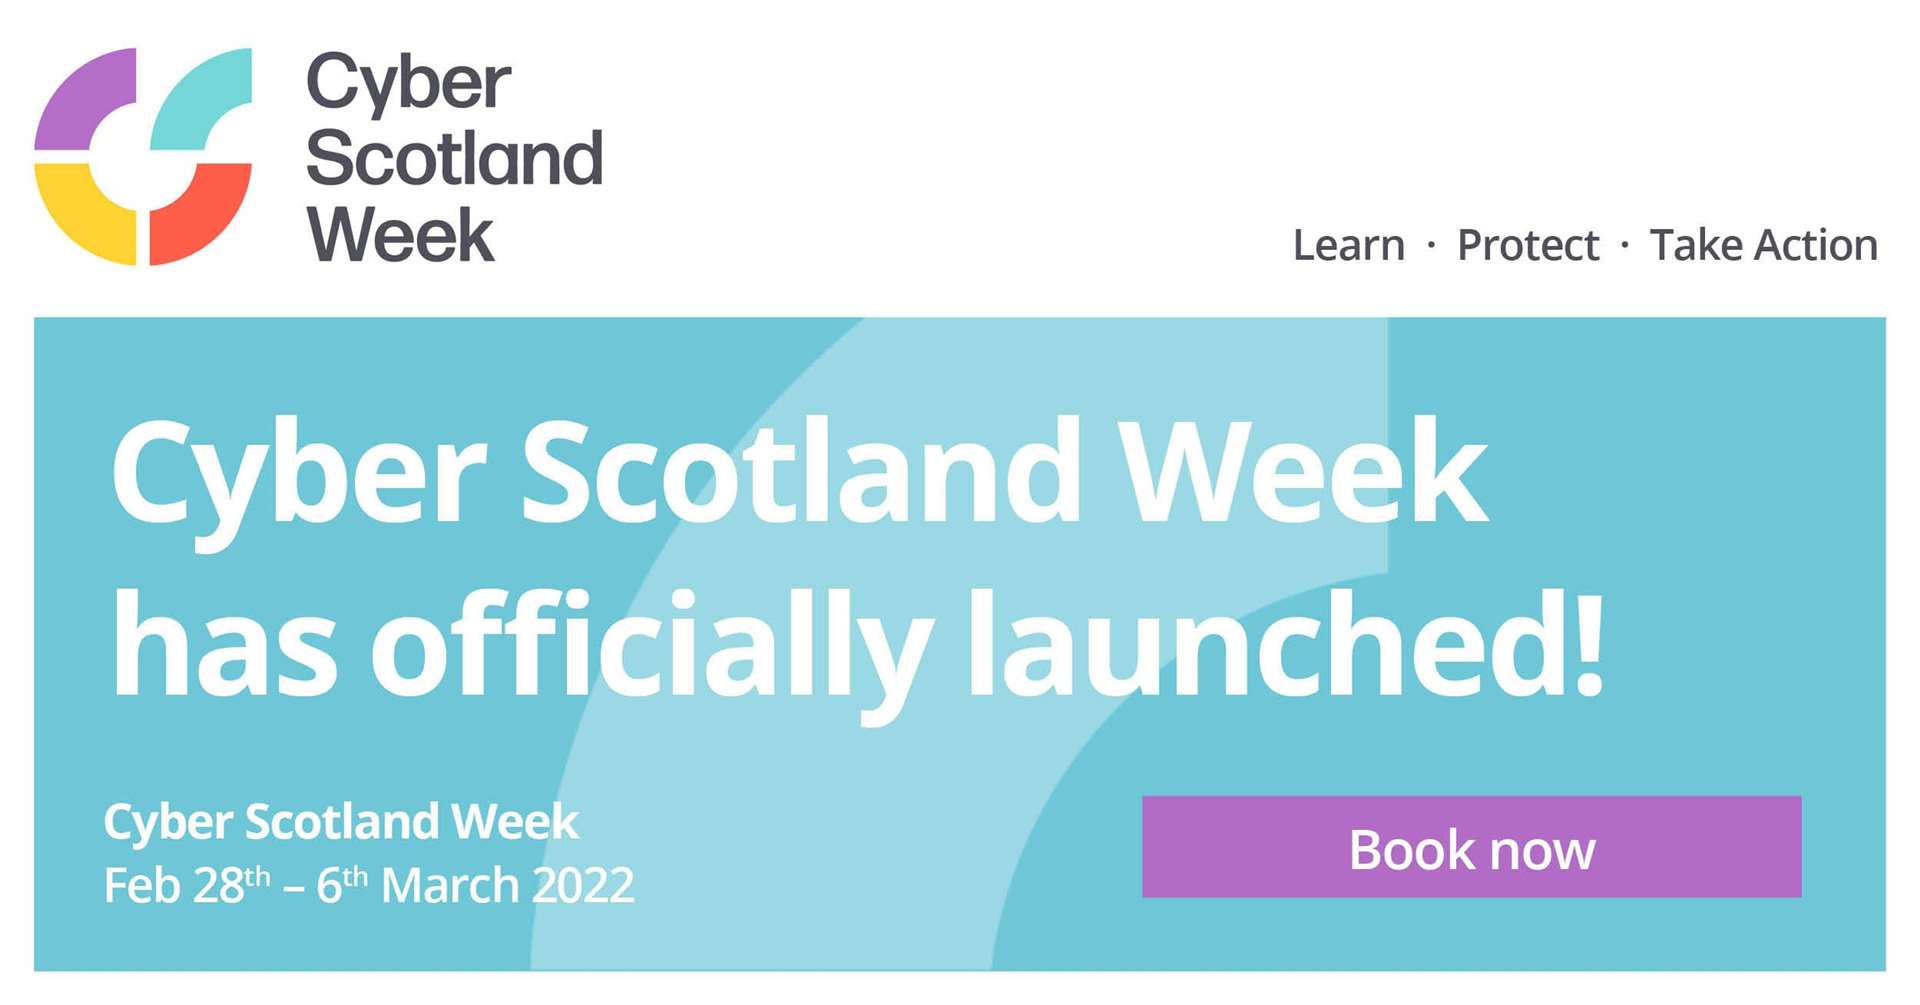 Cyber Scotland Week runs until Sunday, March 6.